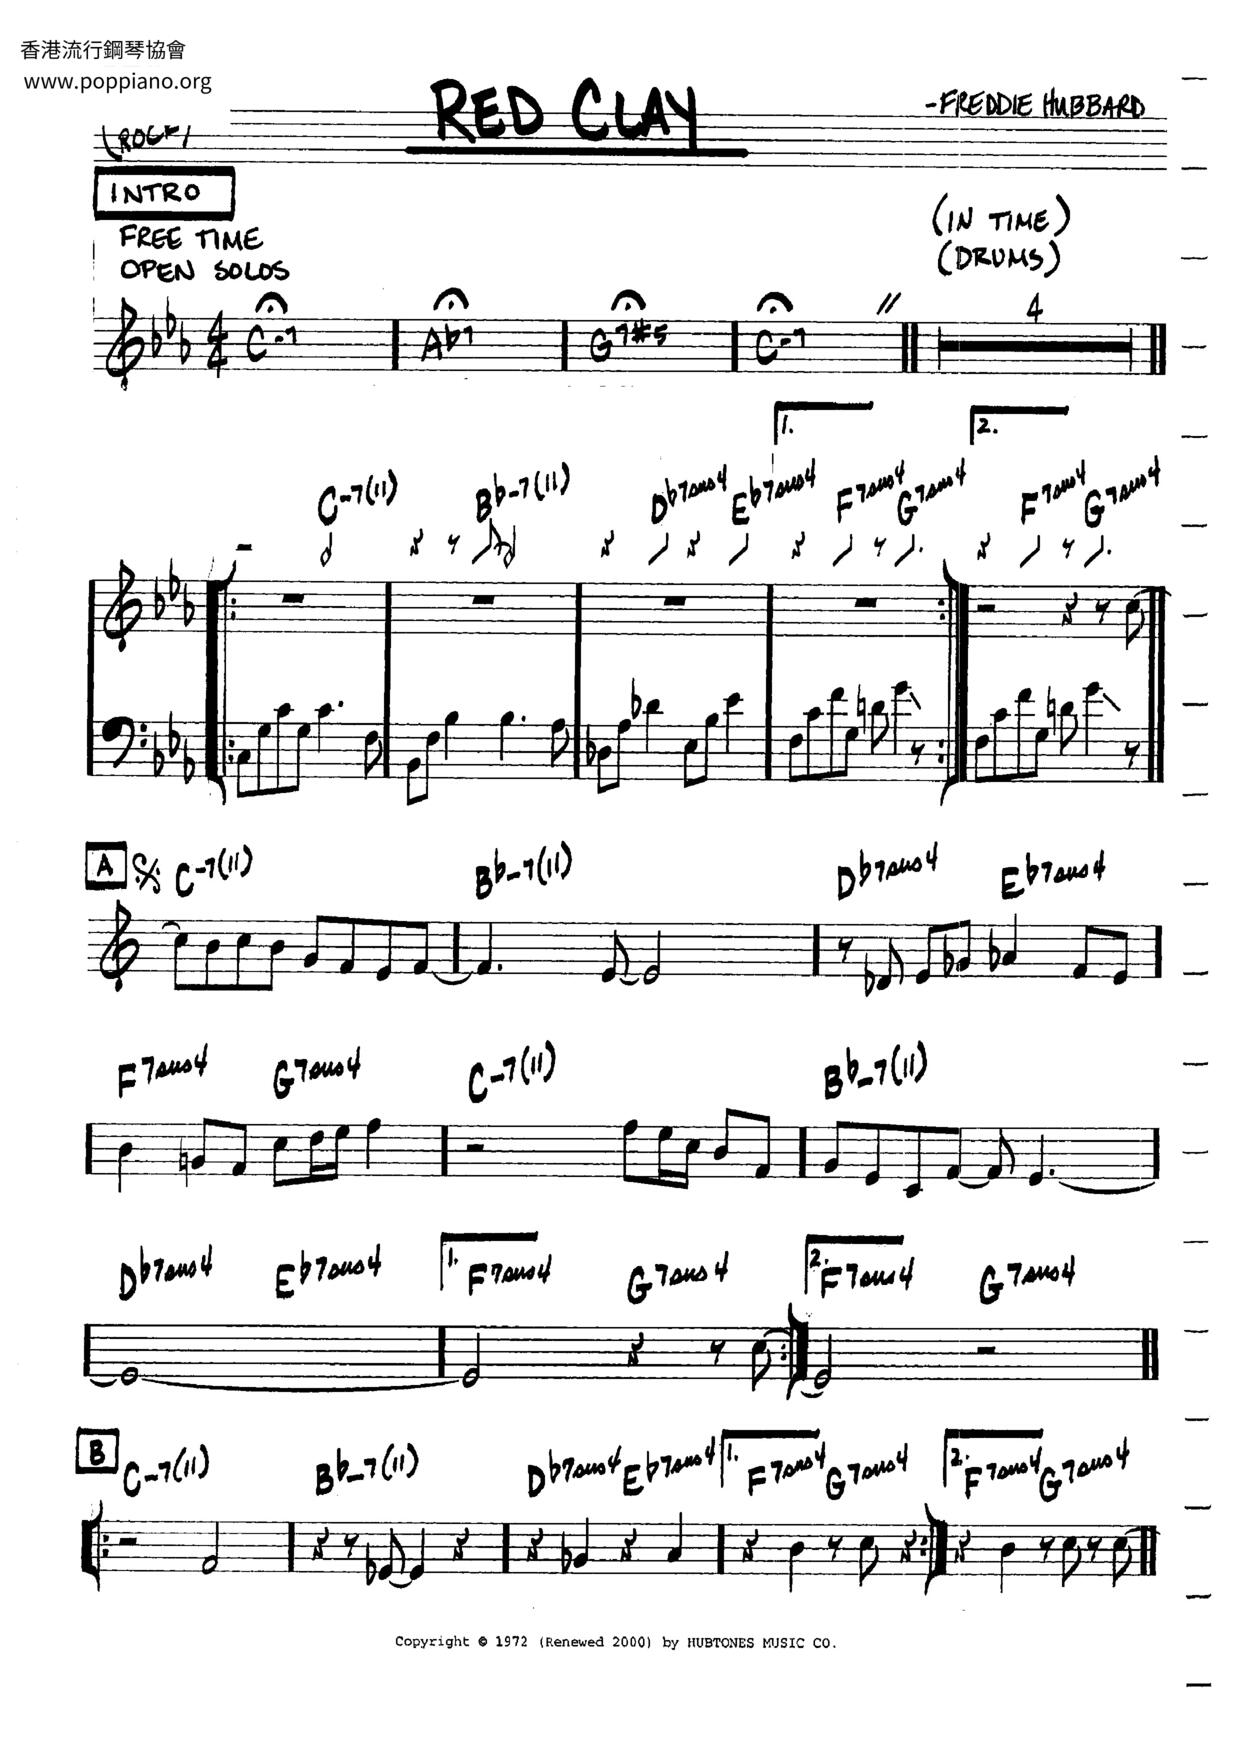 Medellinピアノ譜